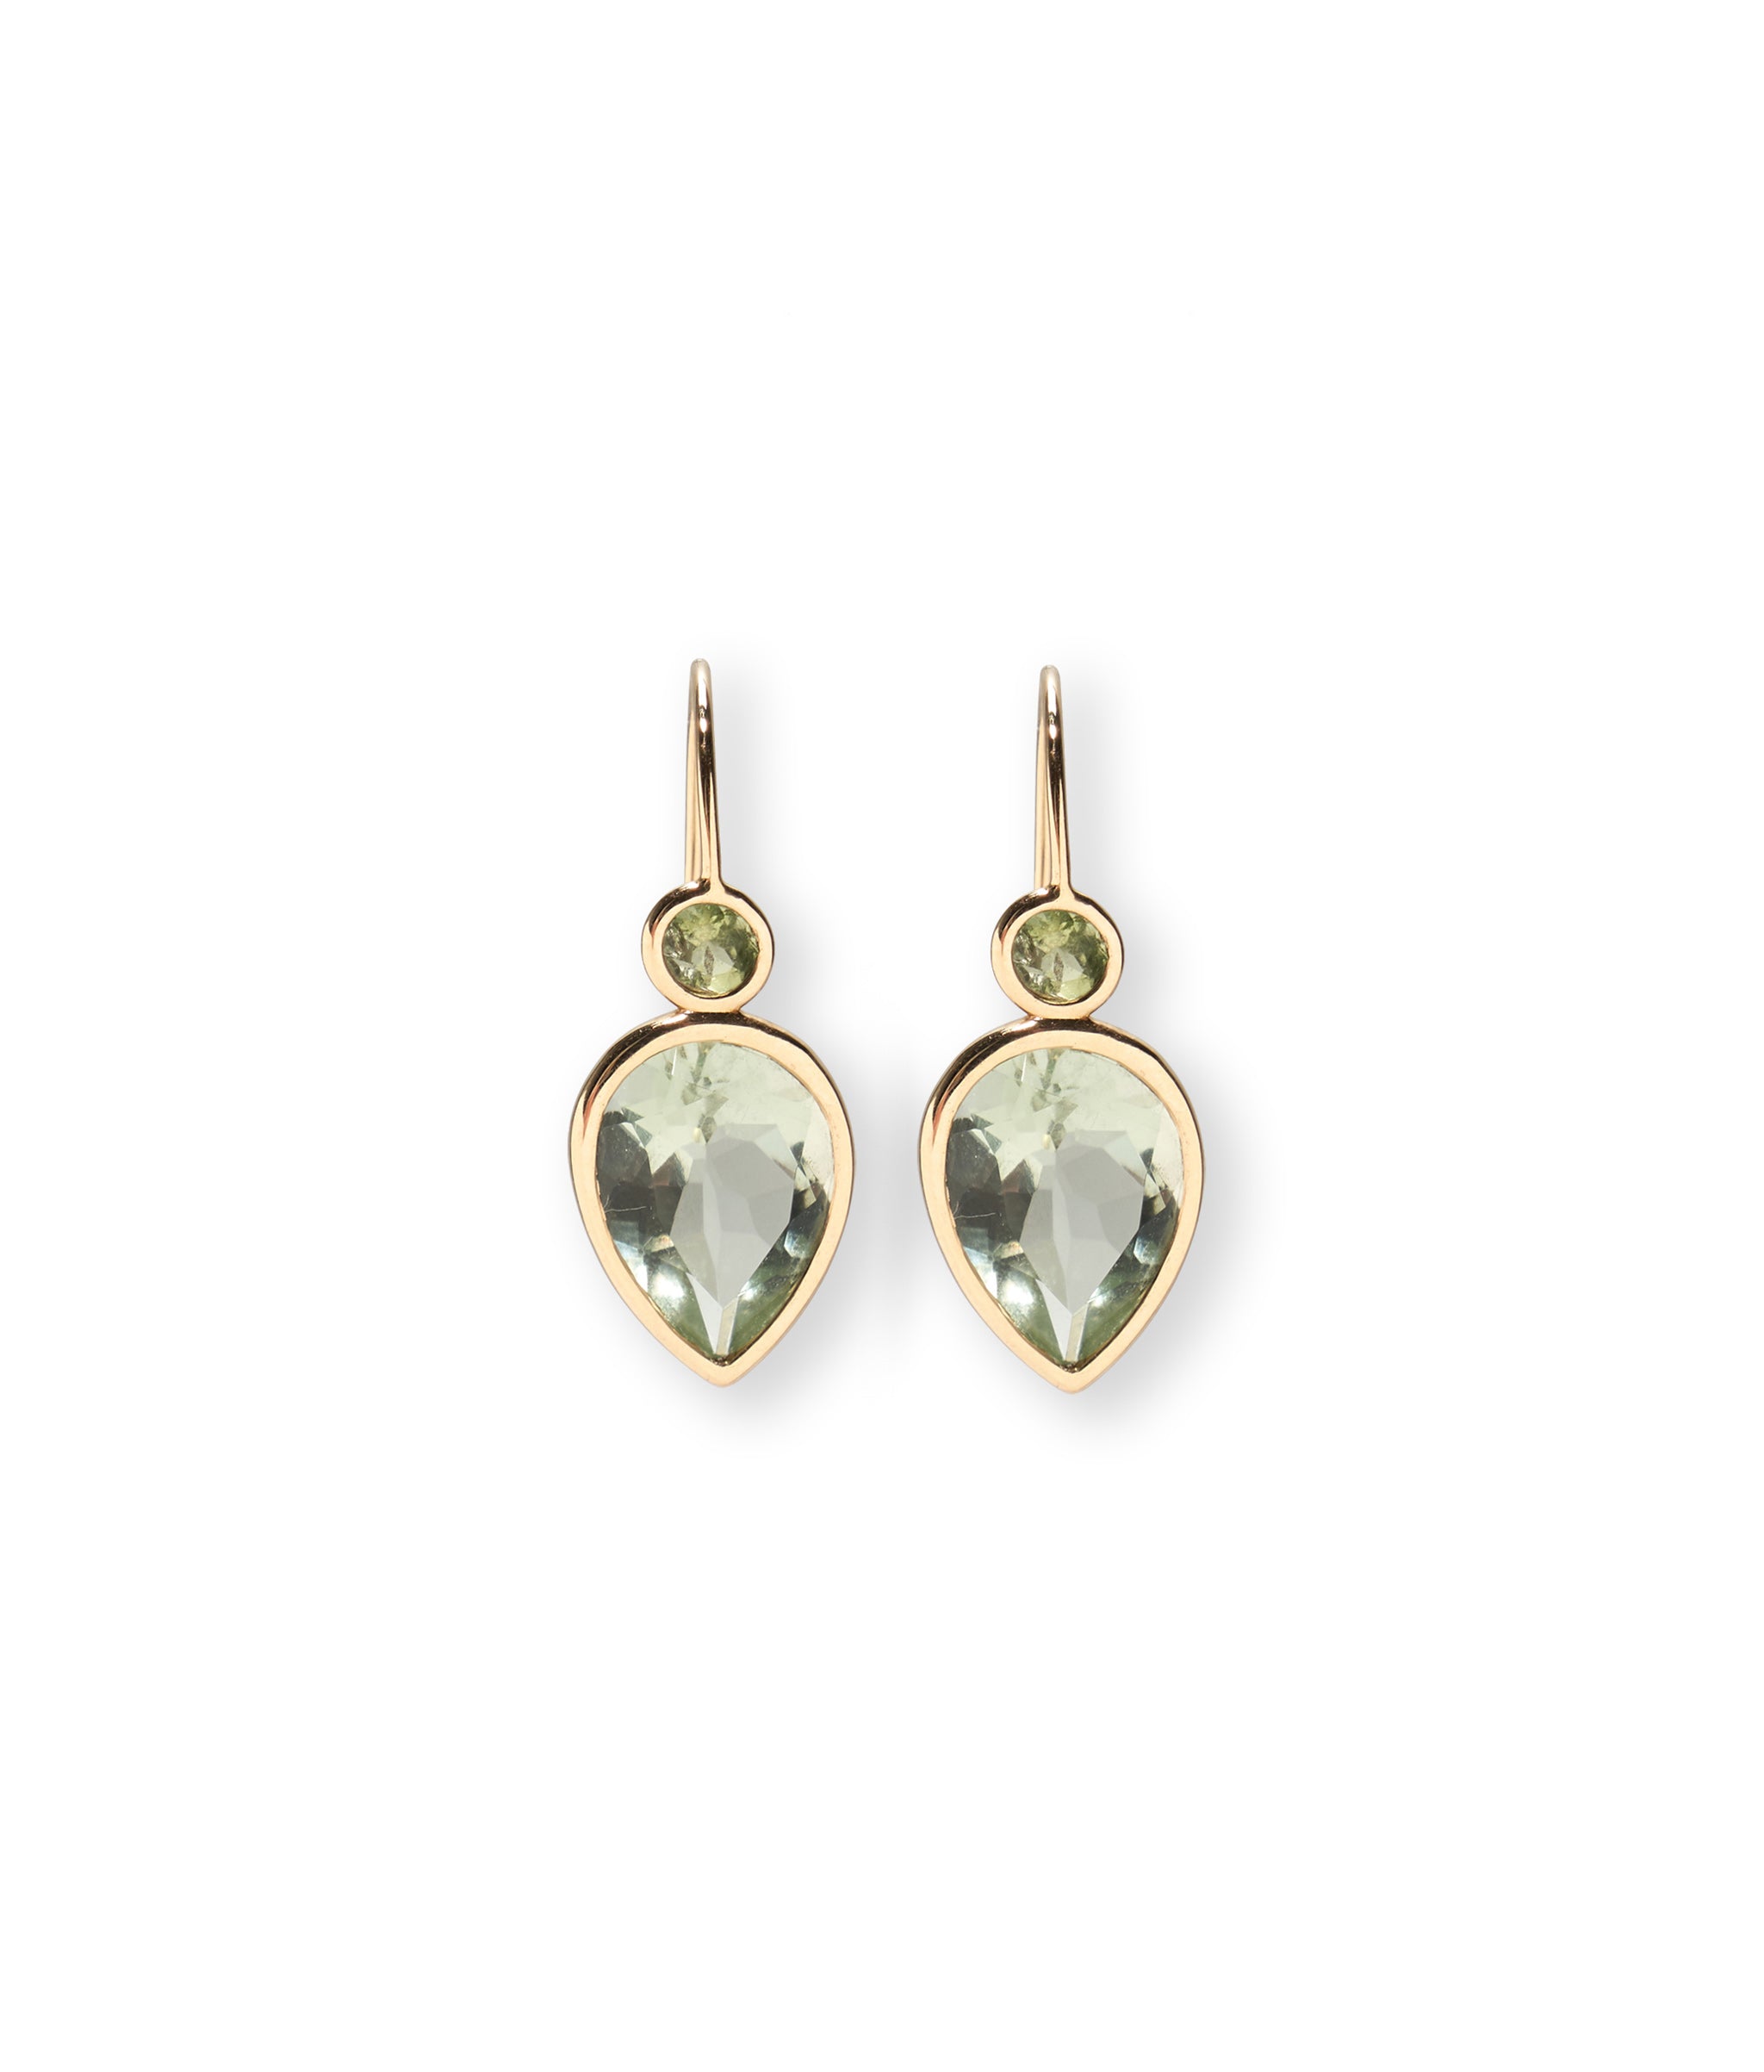 Hera Earrings in Green Amethyst. Faceted pear-shaped green amethyst stones, enrobed in 14k gold bezels.